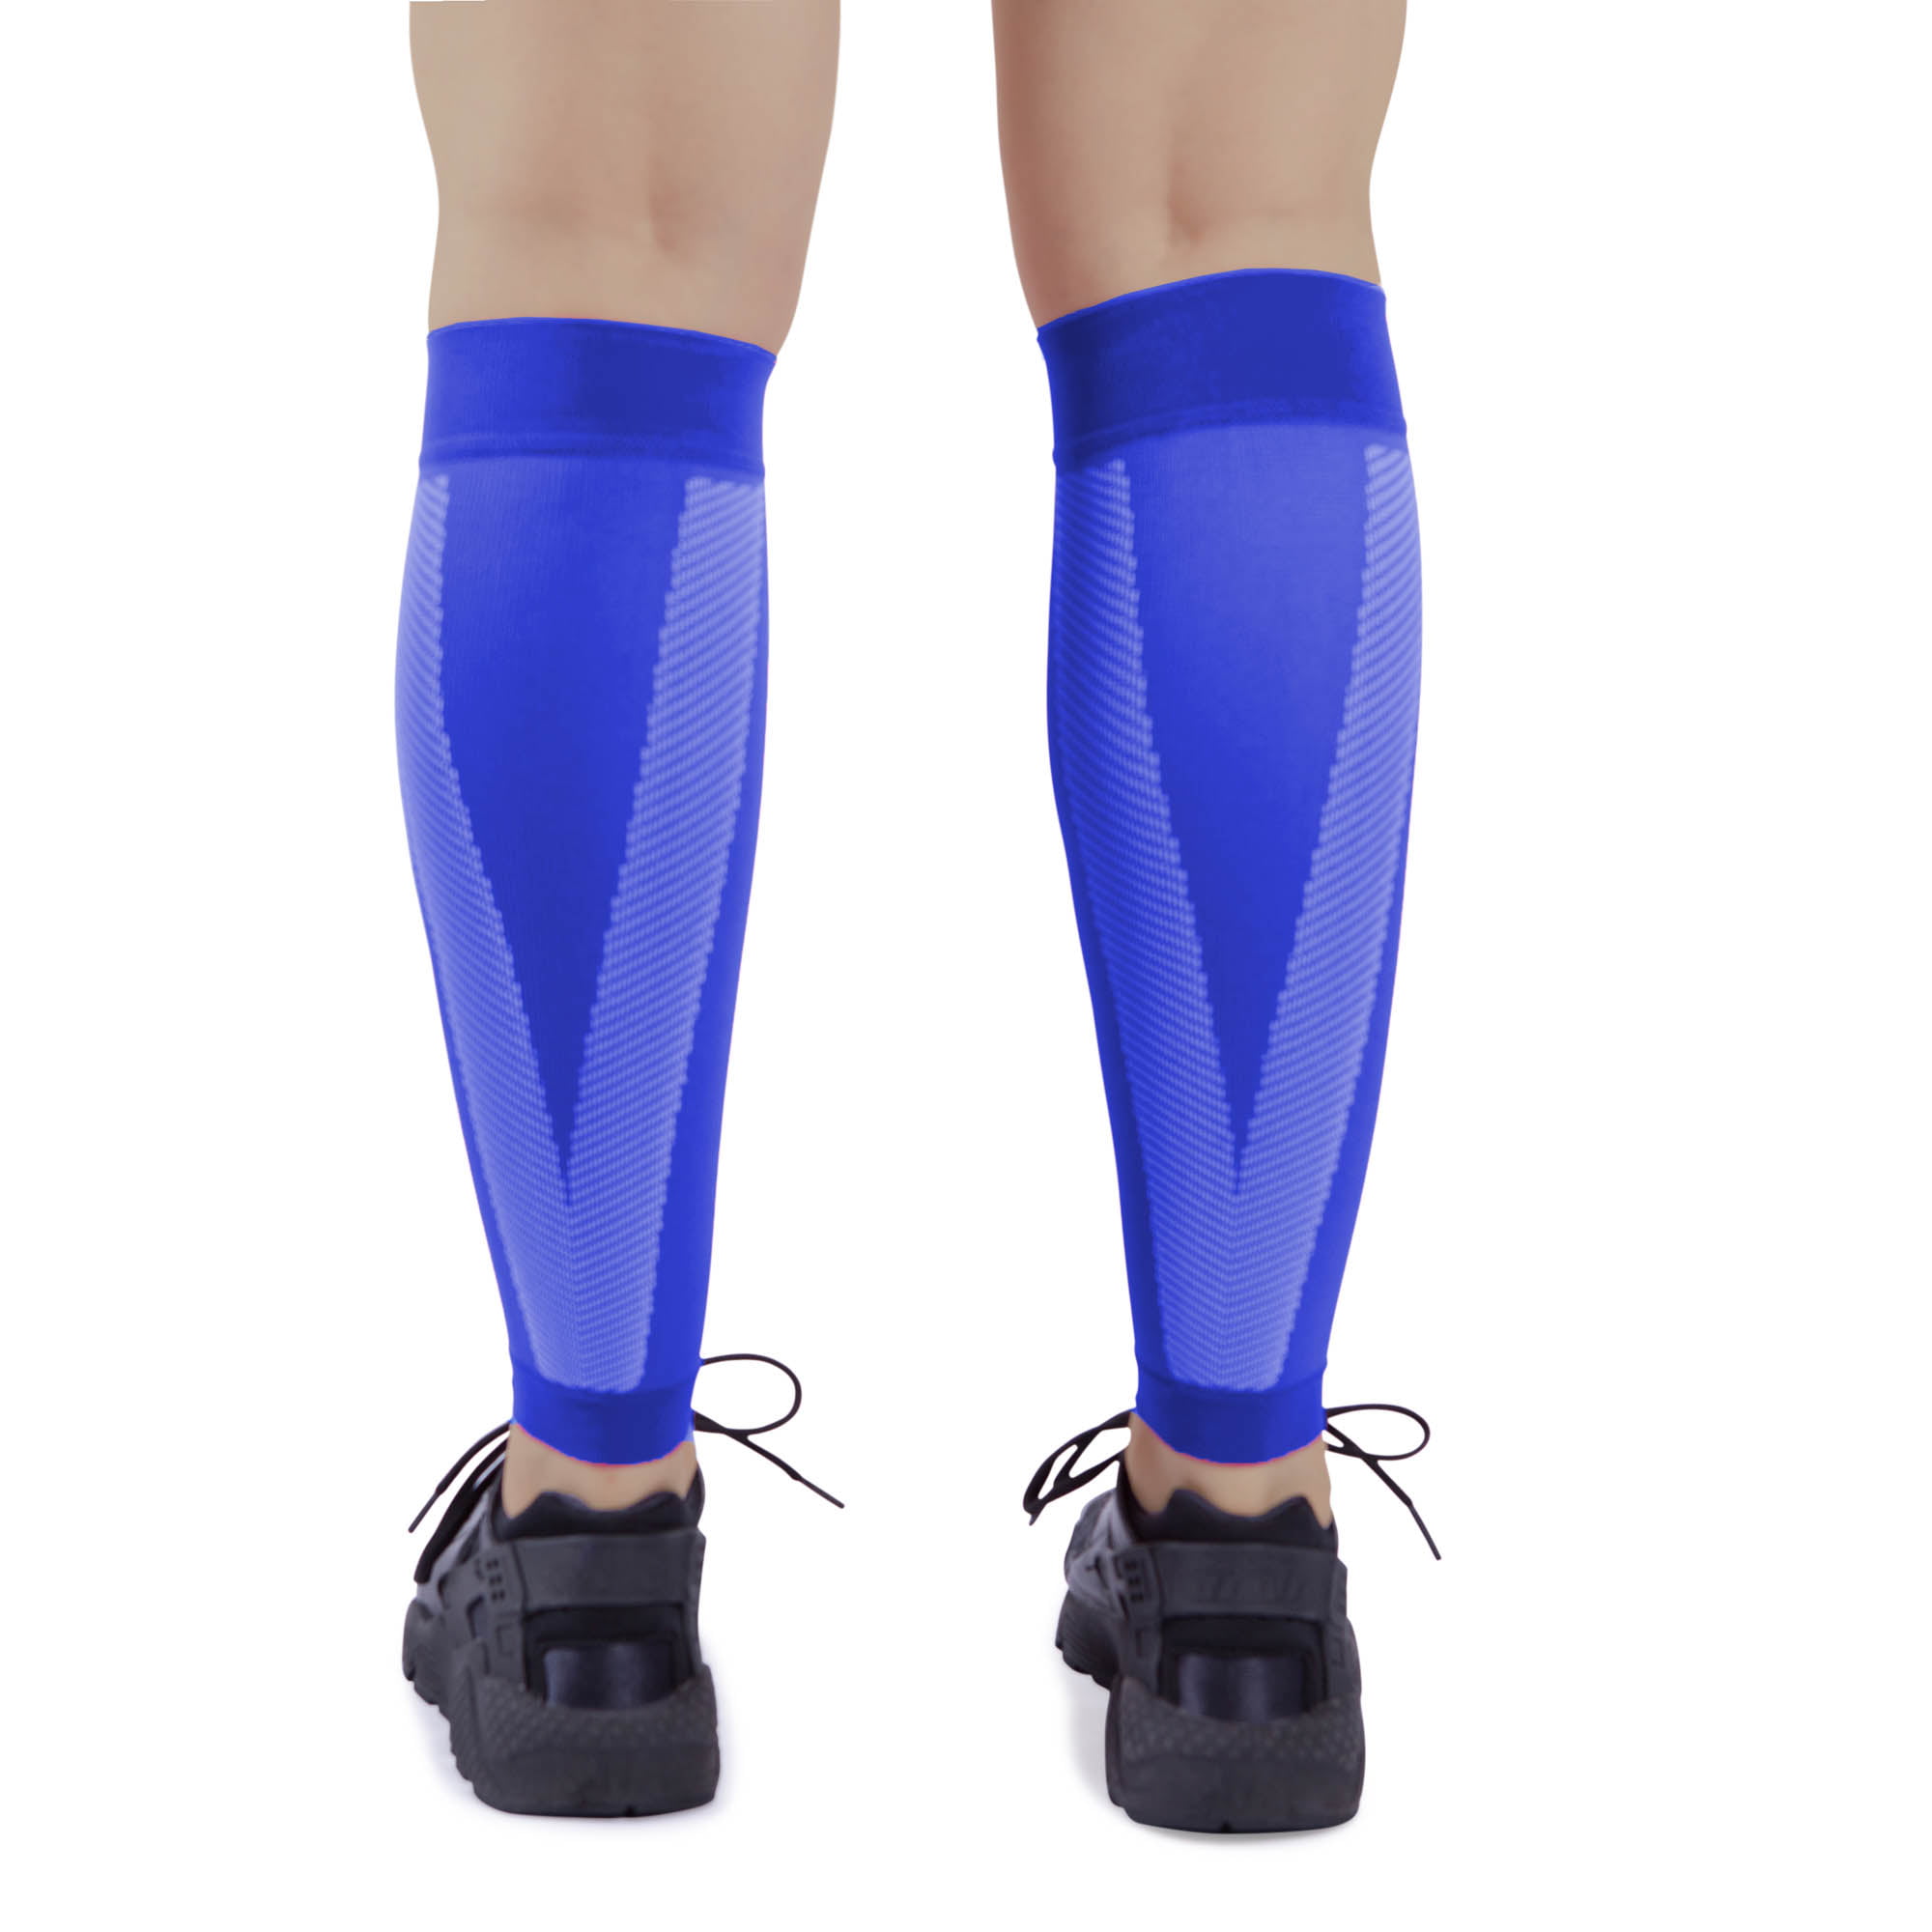 Athletec Sport Compression Calf Sleeve (20-30 mmHg) for Shin